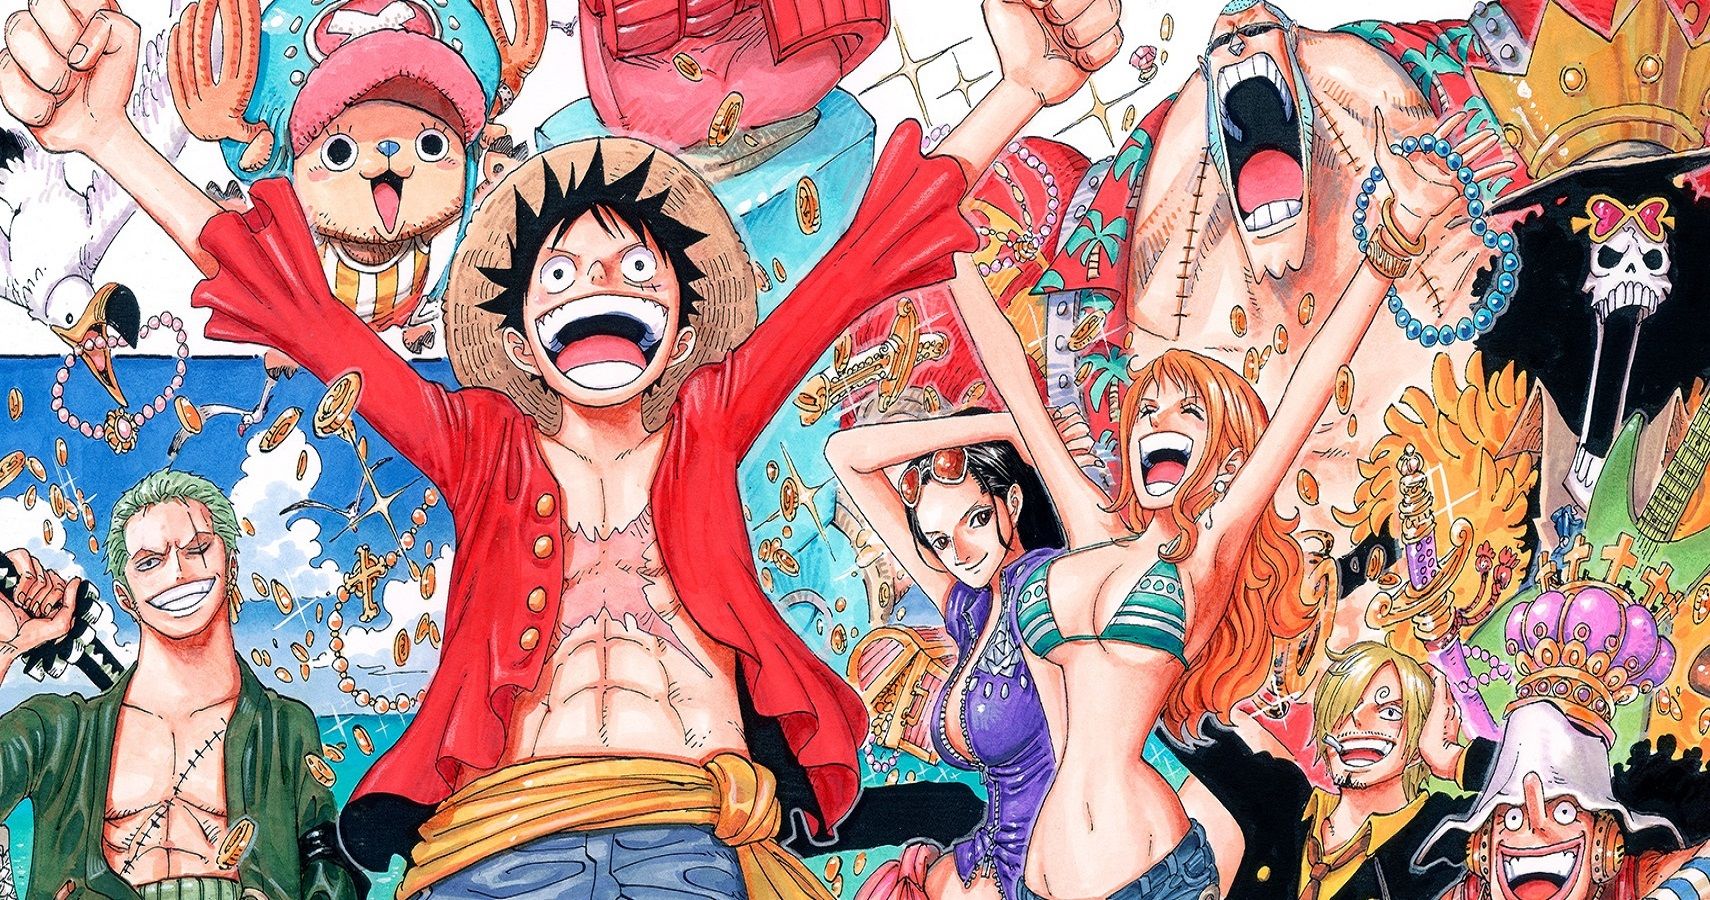 10 One Piece Tattoos Only True Fans Will Understand